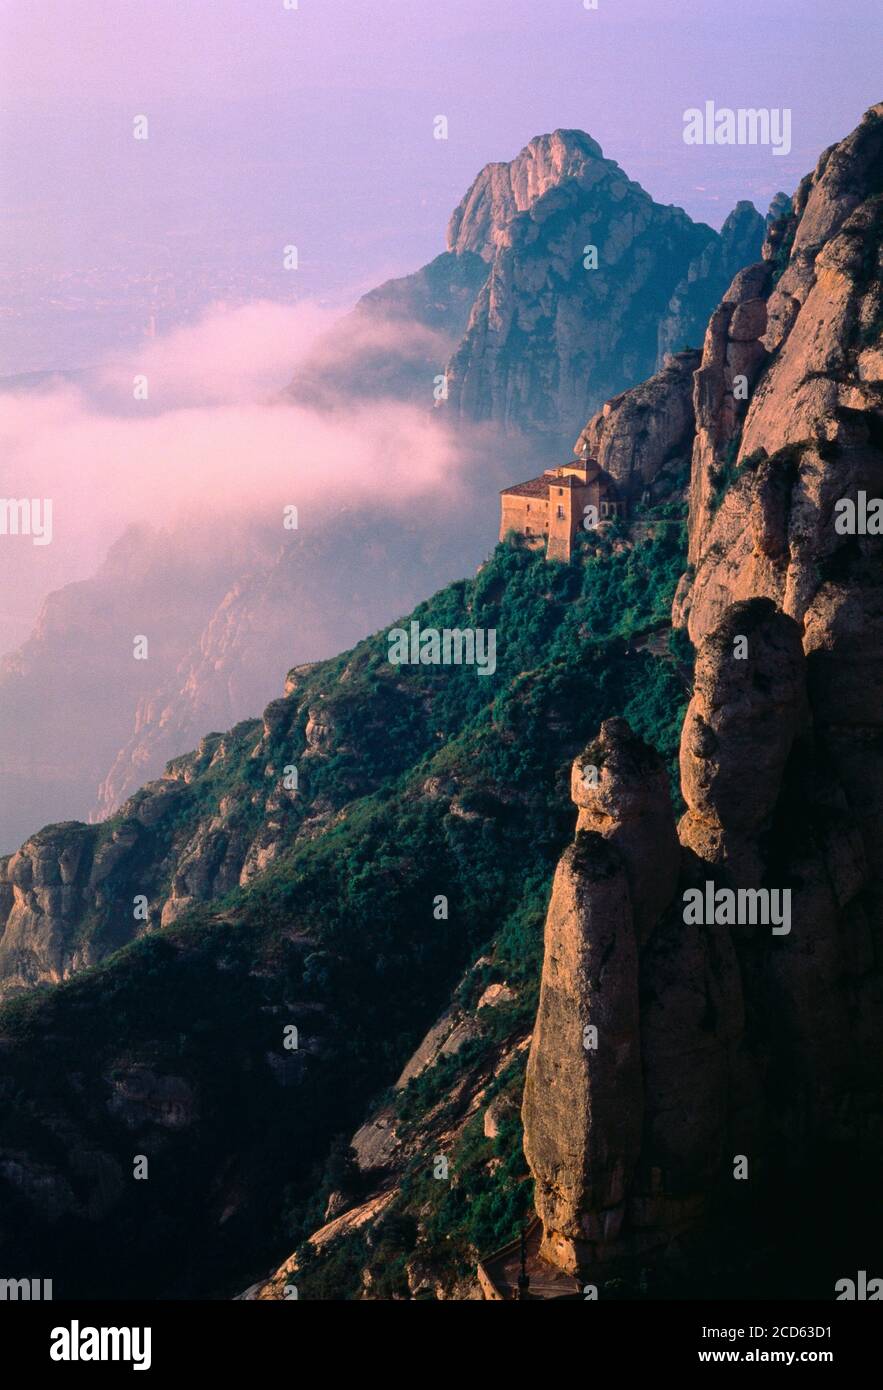 Santa Cova Monastery on mountainside, Sierra de Montserrat, Catalonia, Spain Stock Photo